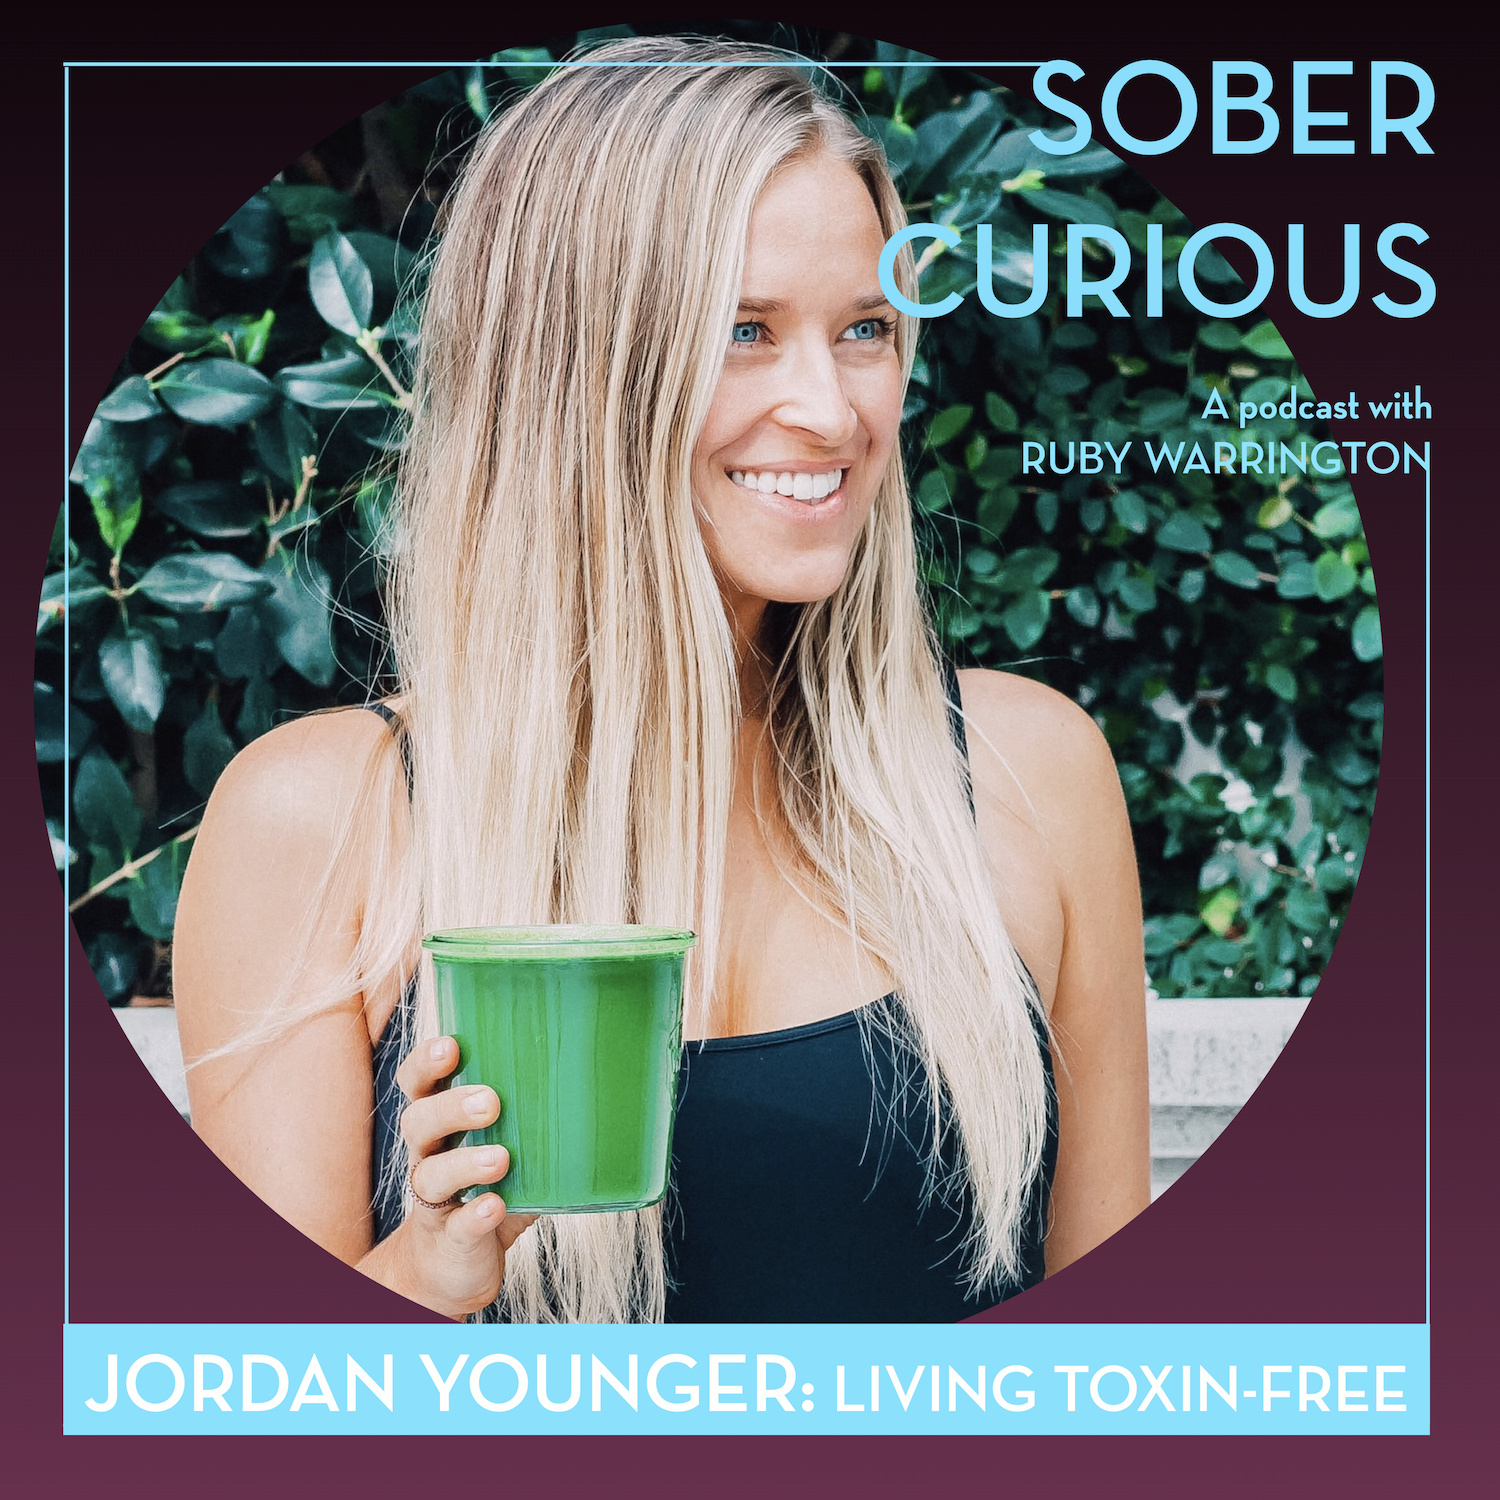 Jordan Younger Sober Curious podcast Ruby Warrington The Balanced Blonde